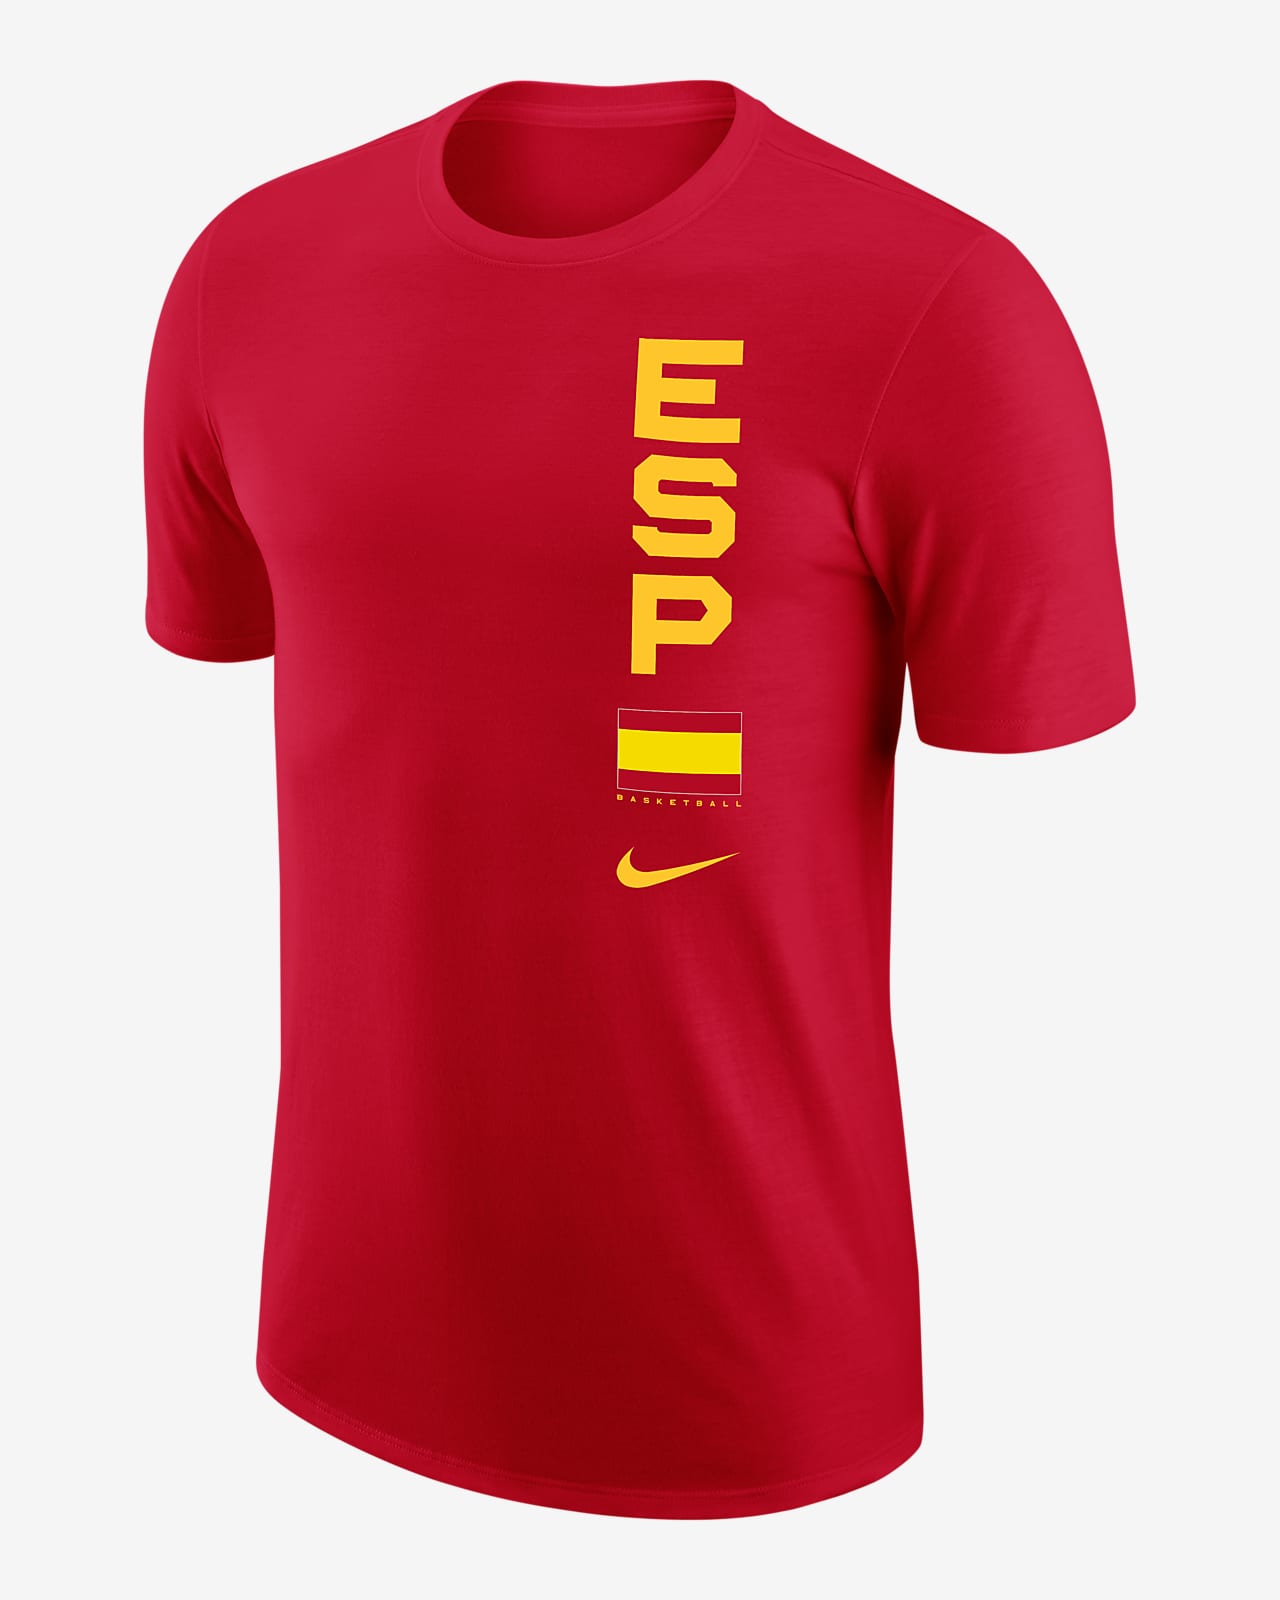 Spain Nike Dri-FIT Camiseta de baloncesto del equipo - Hombre